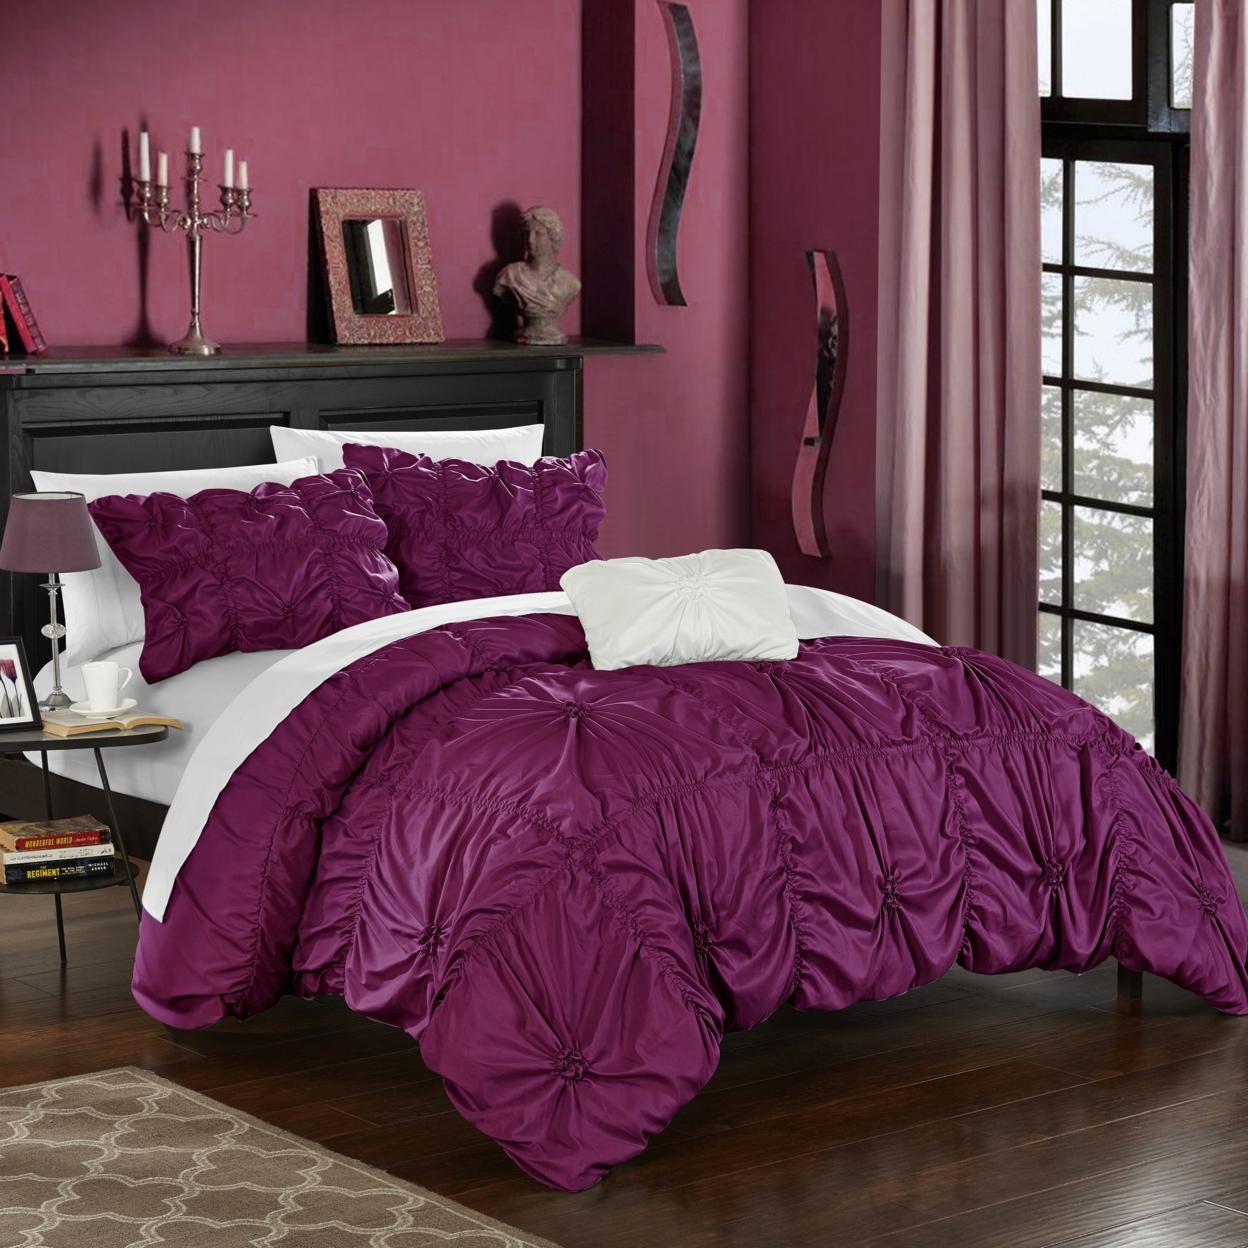 Chic Home 4 Piece Zach Floral Pinch Pleat Ruffled Designer Embellished Duvet Cover Set - Purple, Queen